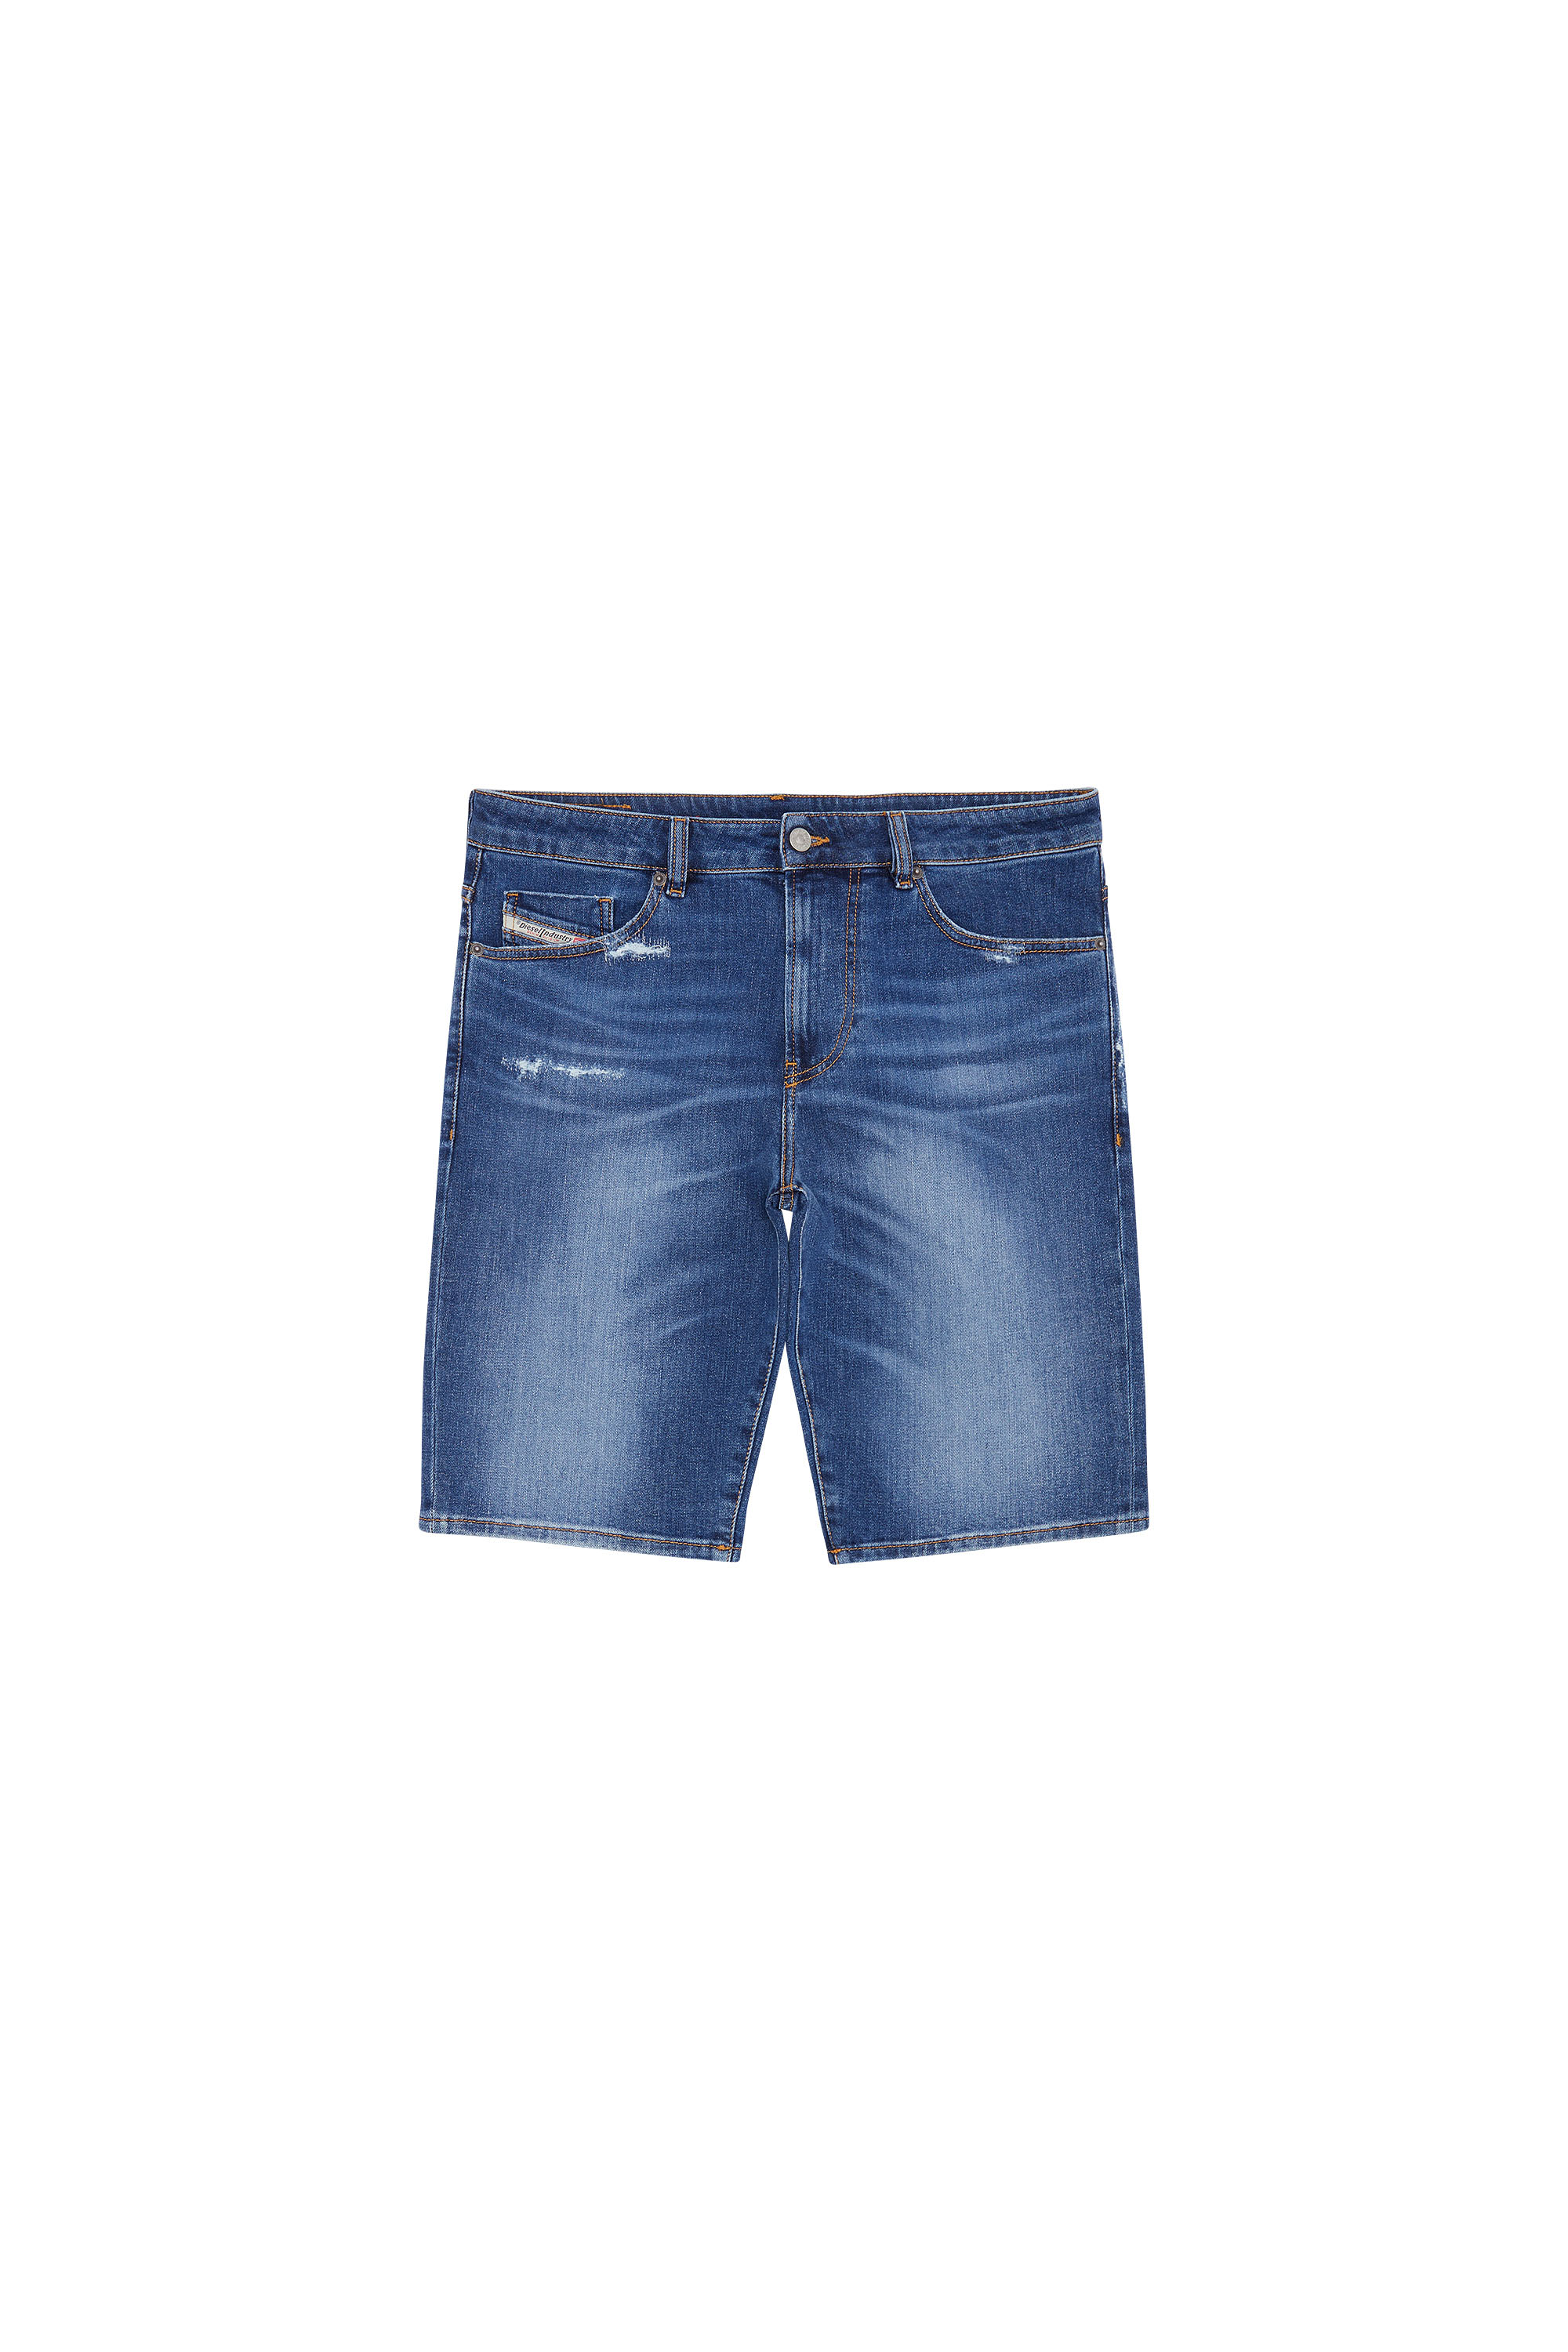 Circular Infidelity Borrow Men's Shorts: Denim, Chino, Sweat | Shop on Diesel.com